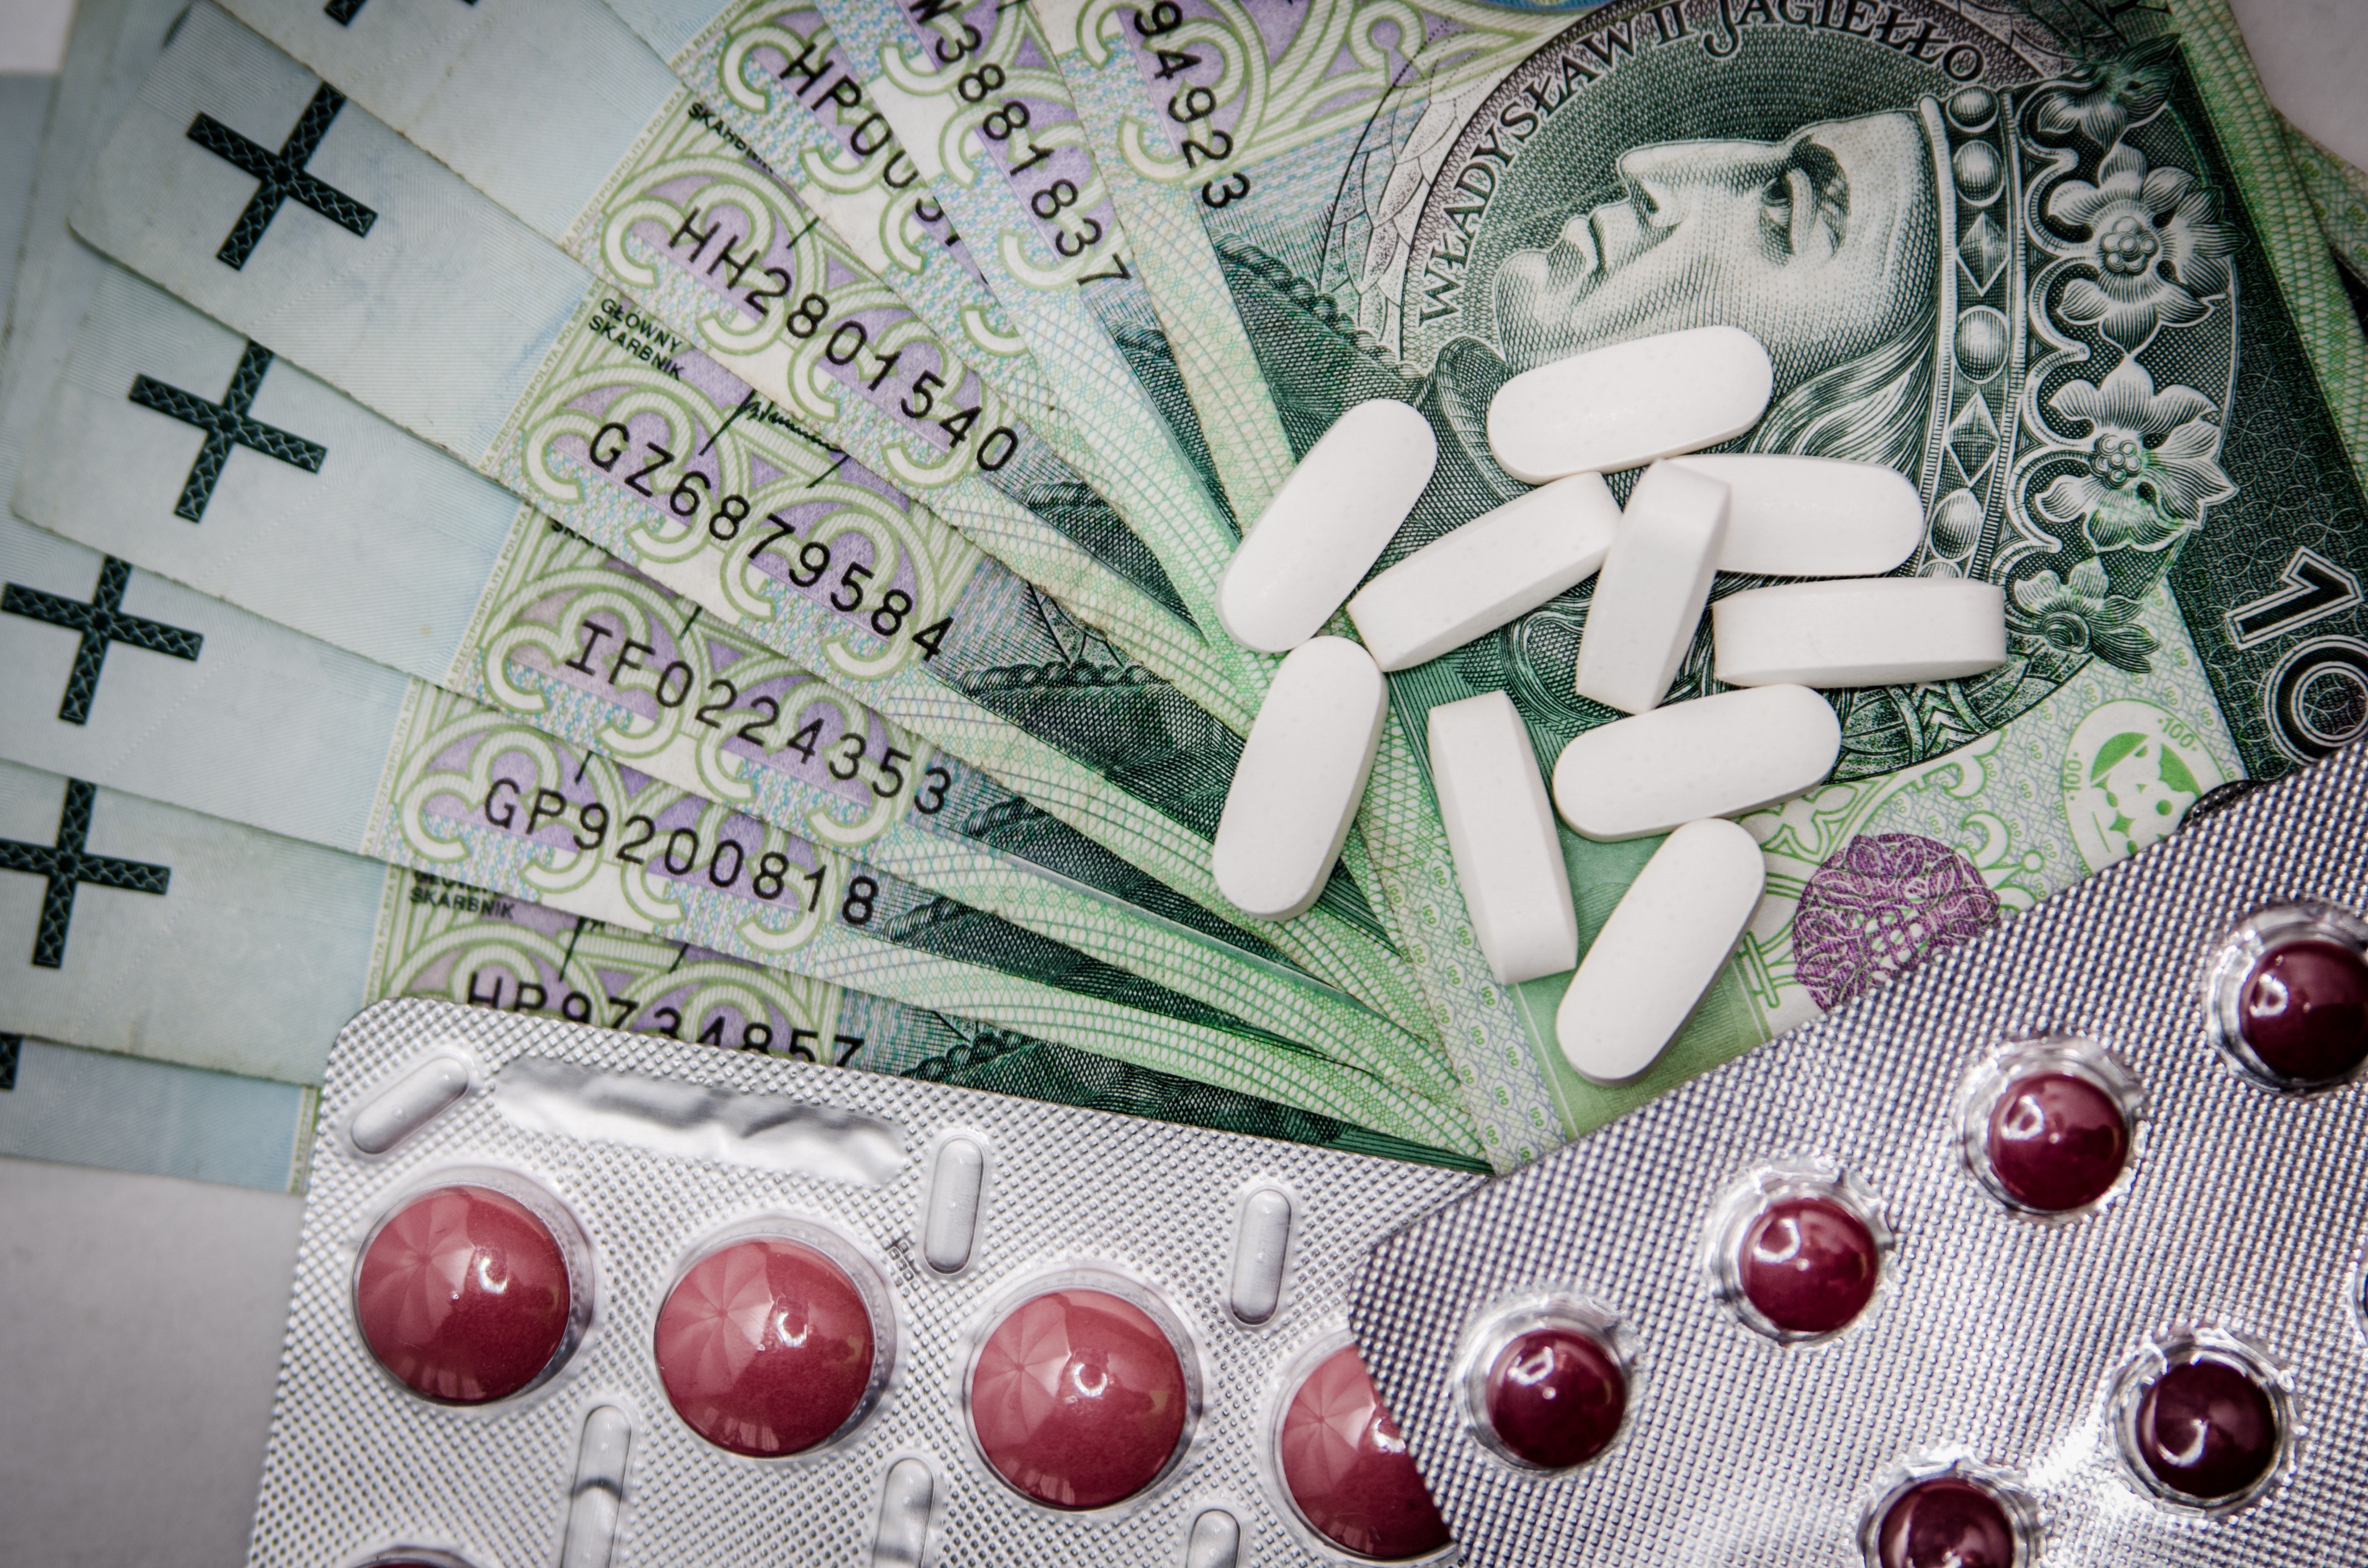 Drug Development Wednesday: How Are Drugs Priced?